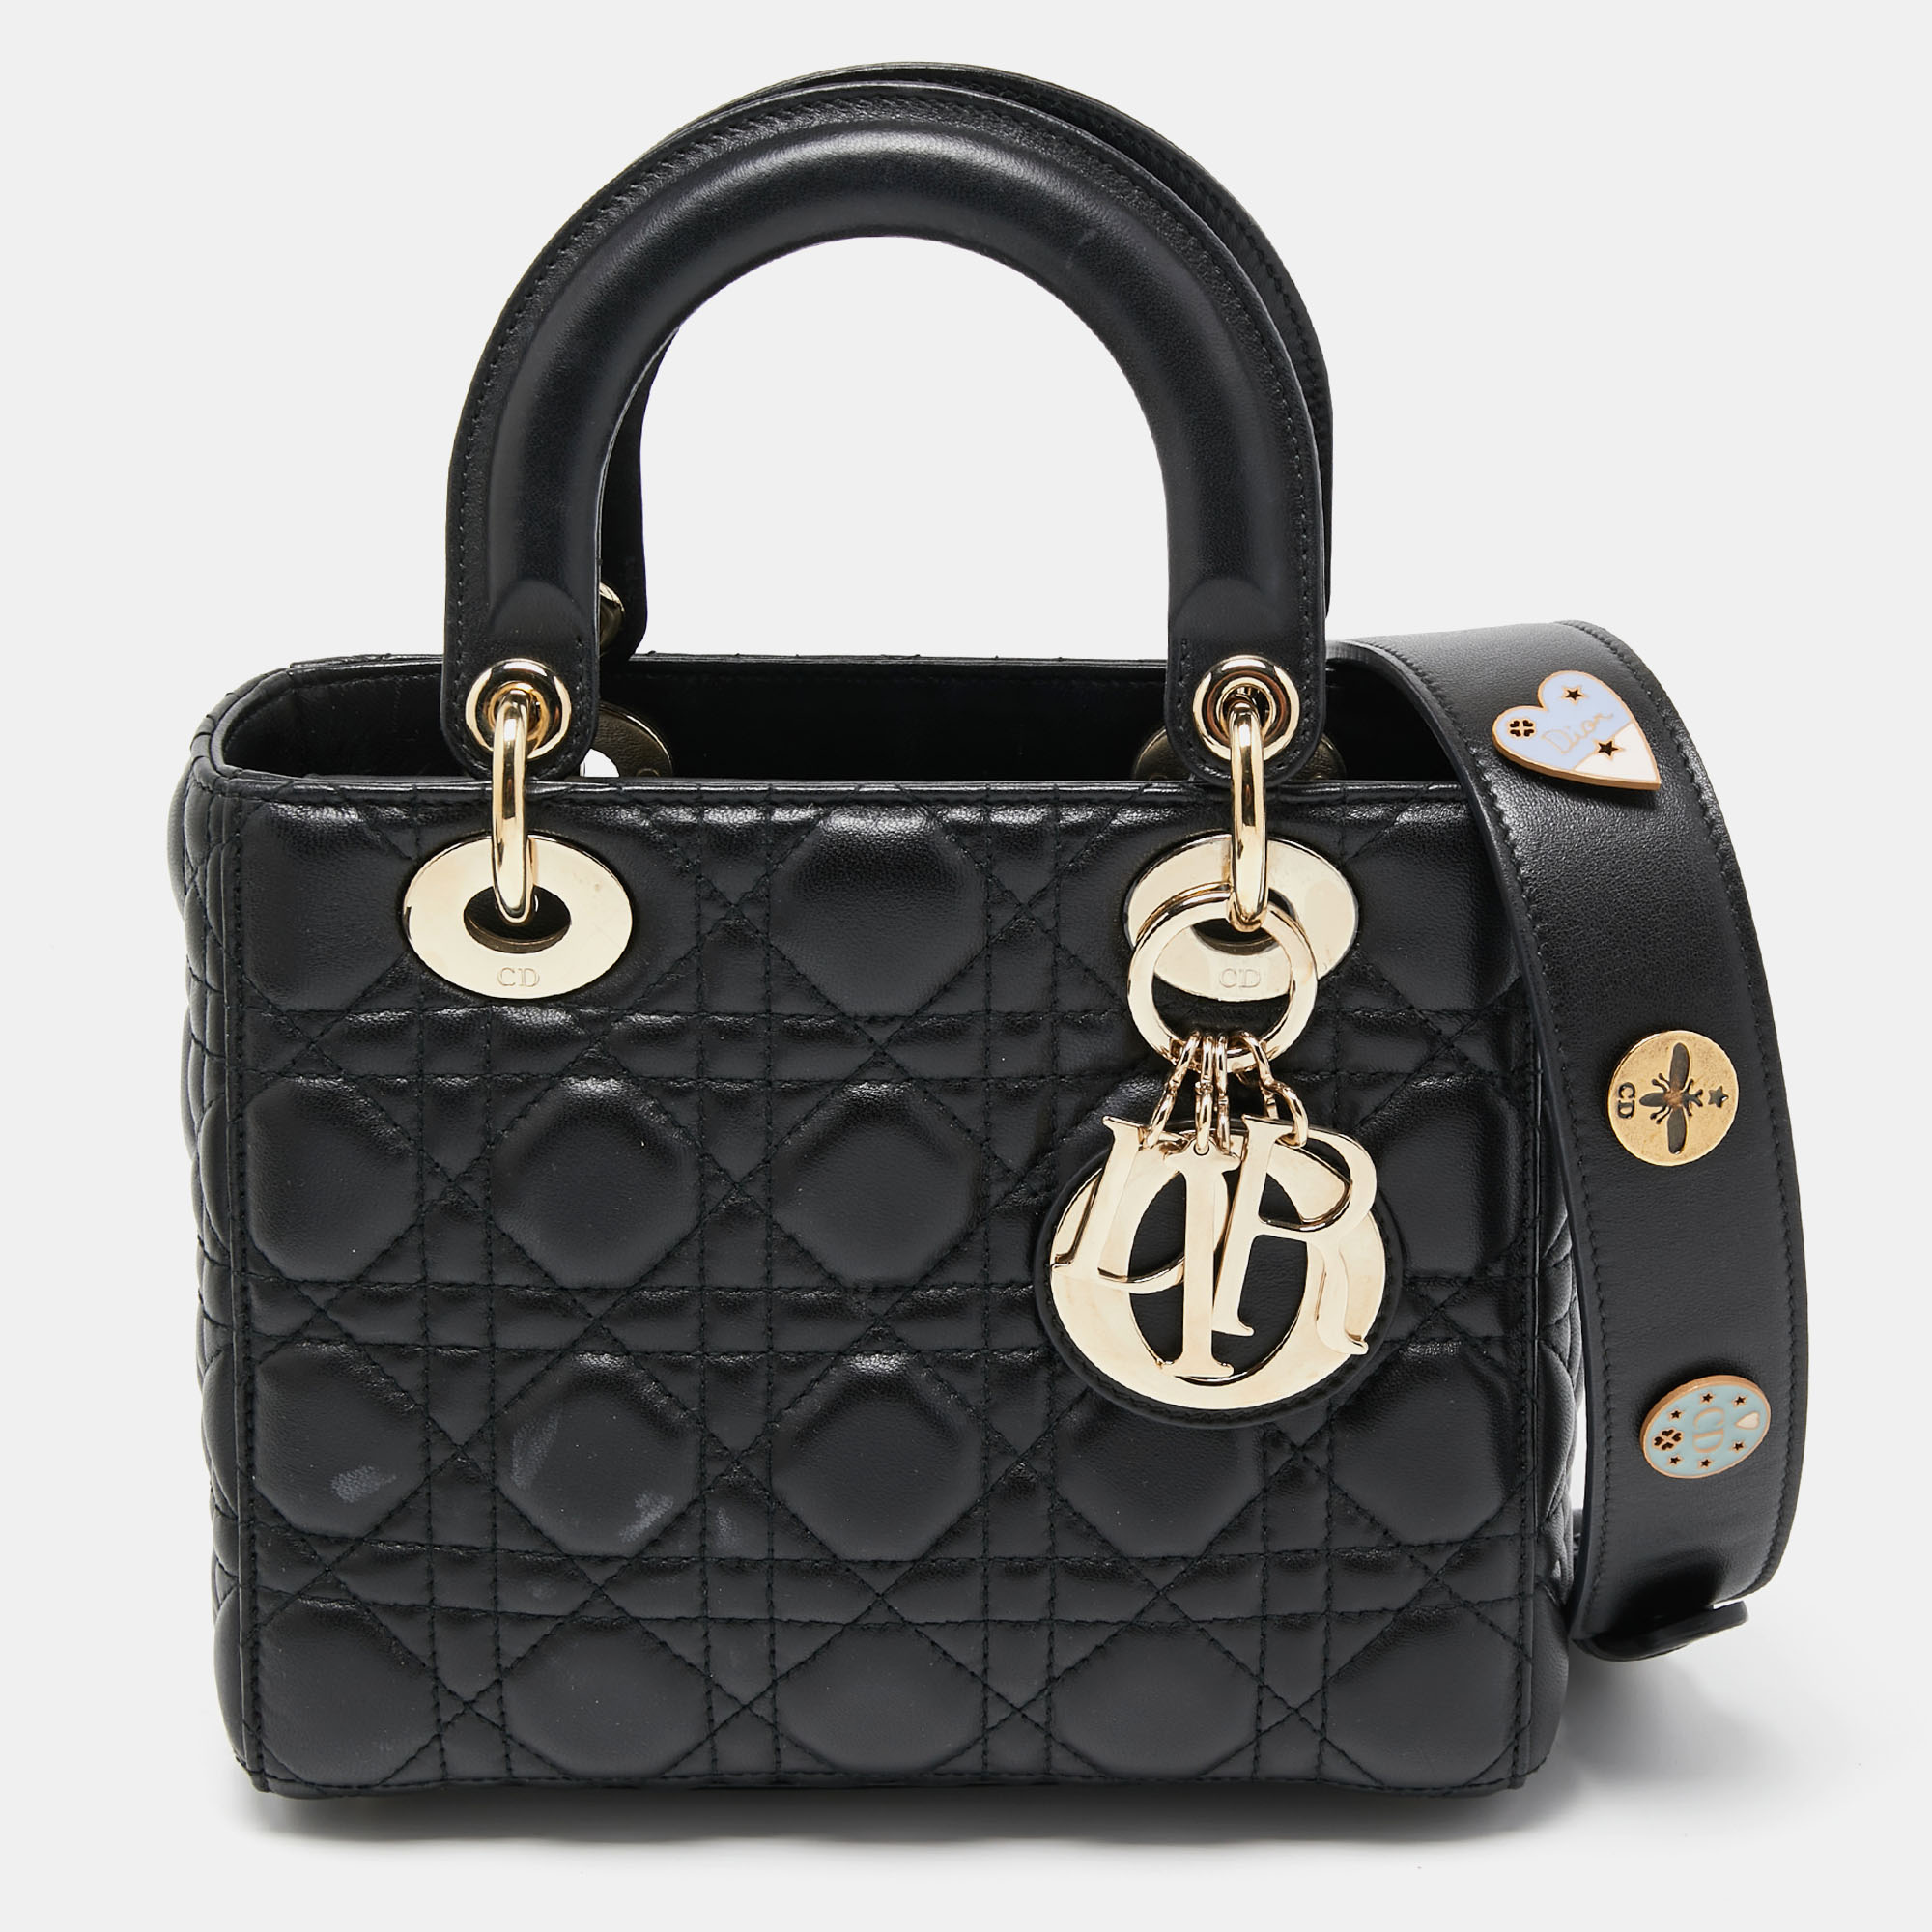 Dior Black Cannage Leather Small Lady Dior Bag